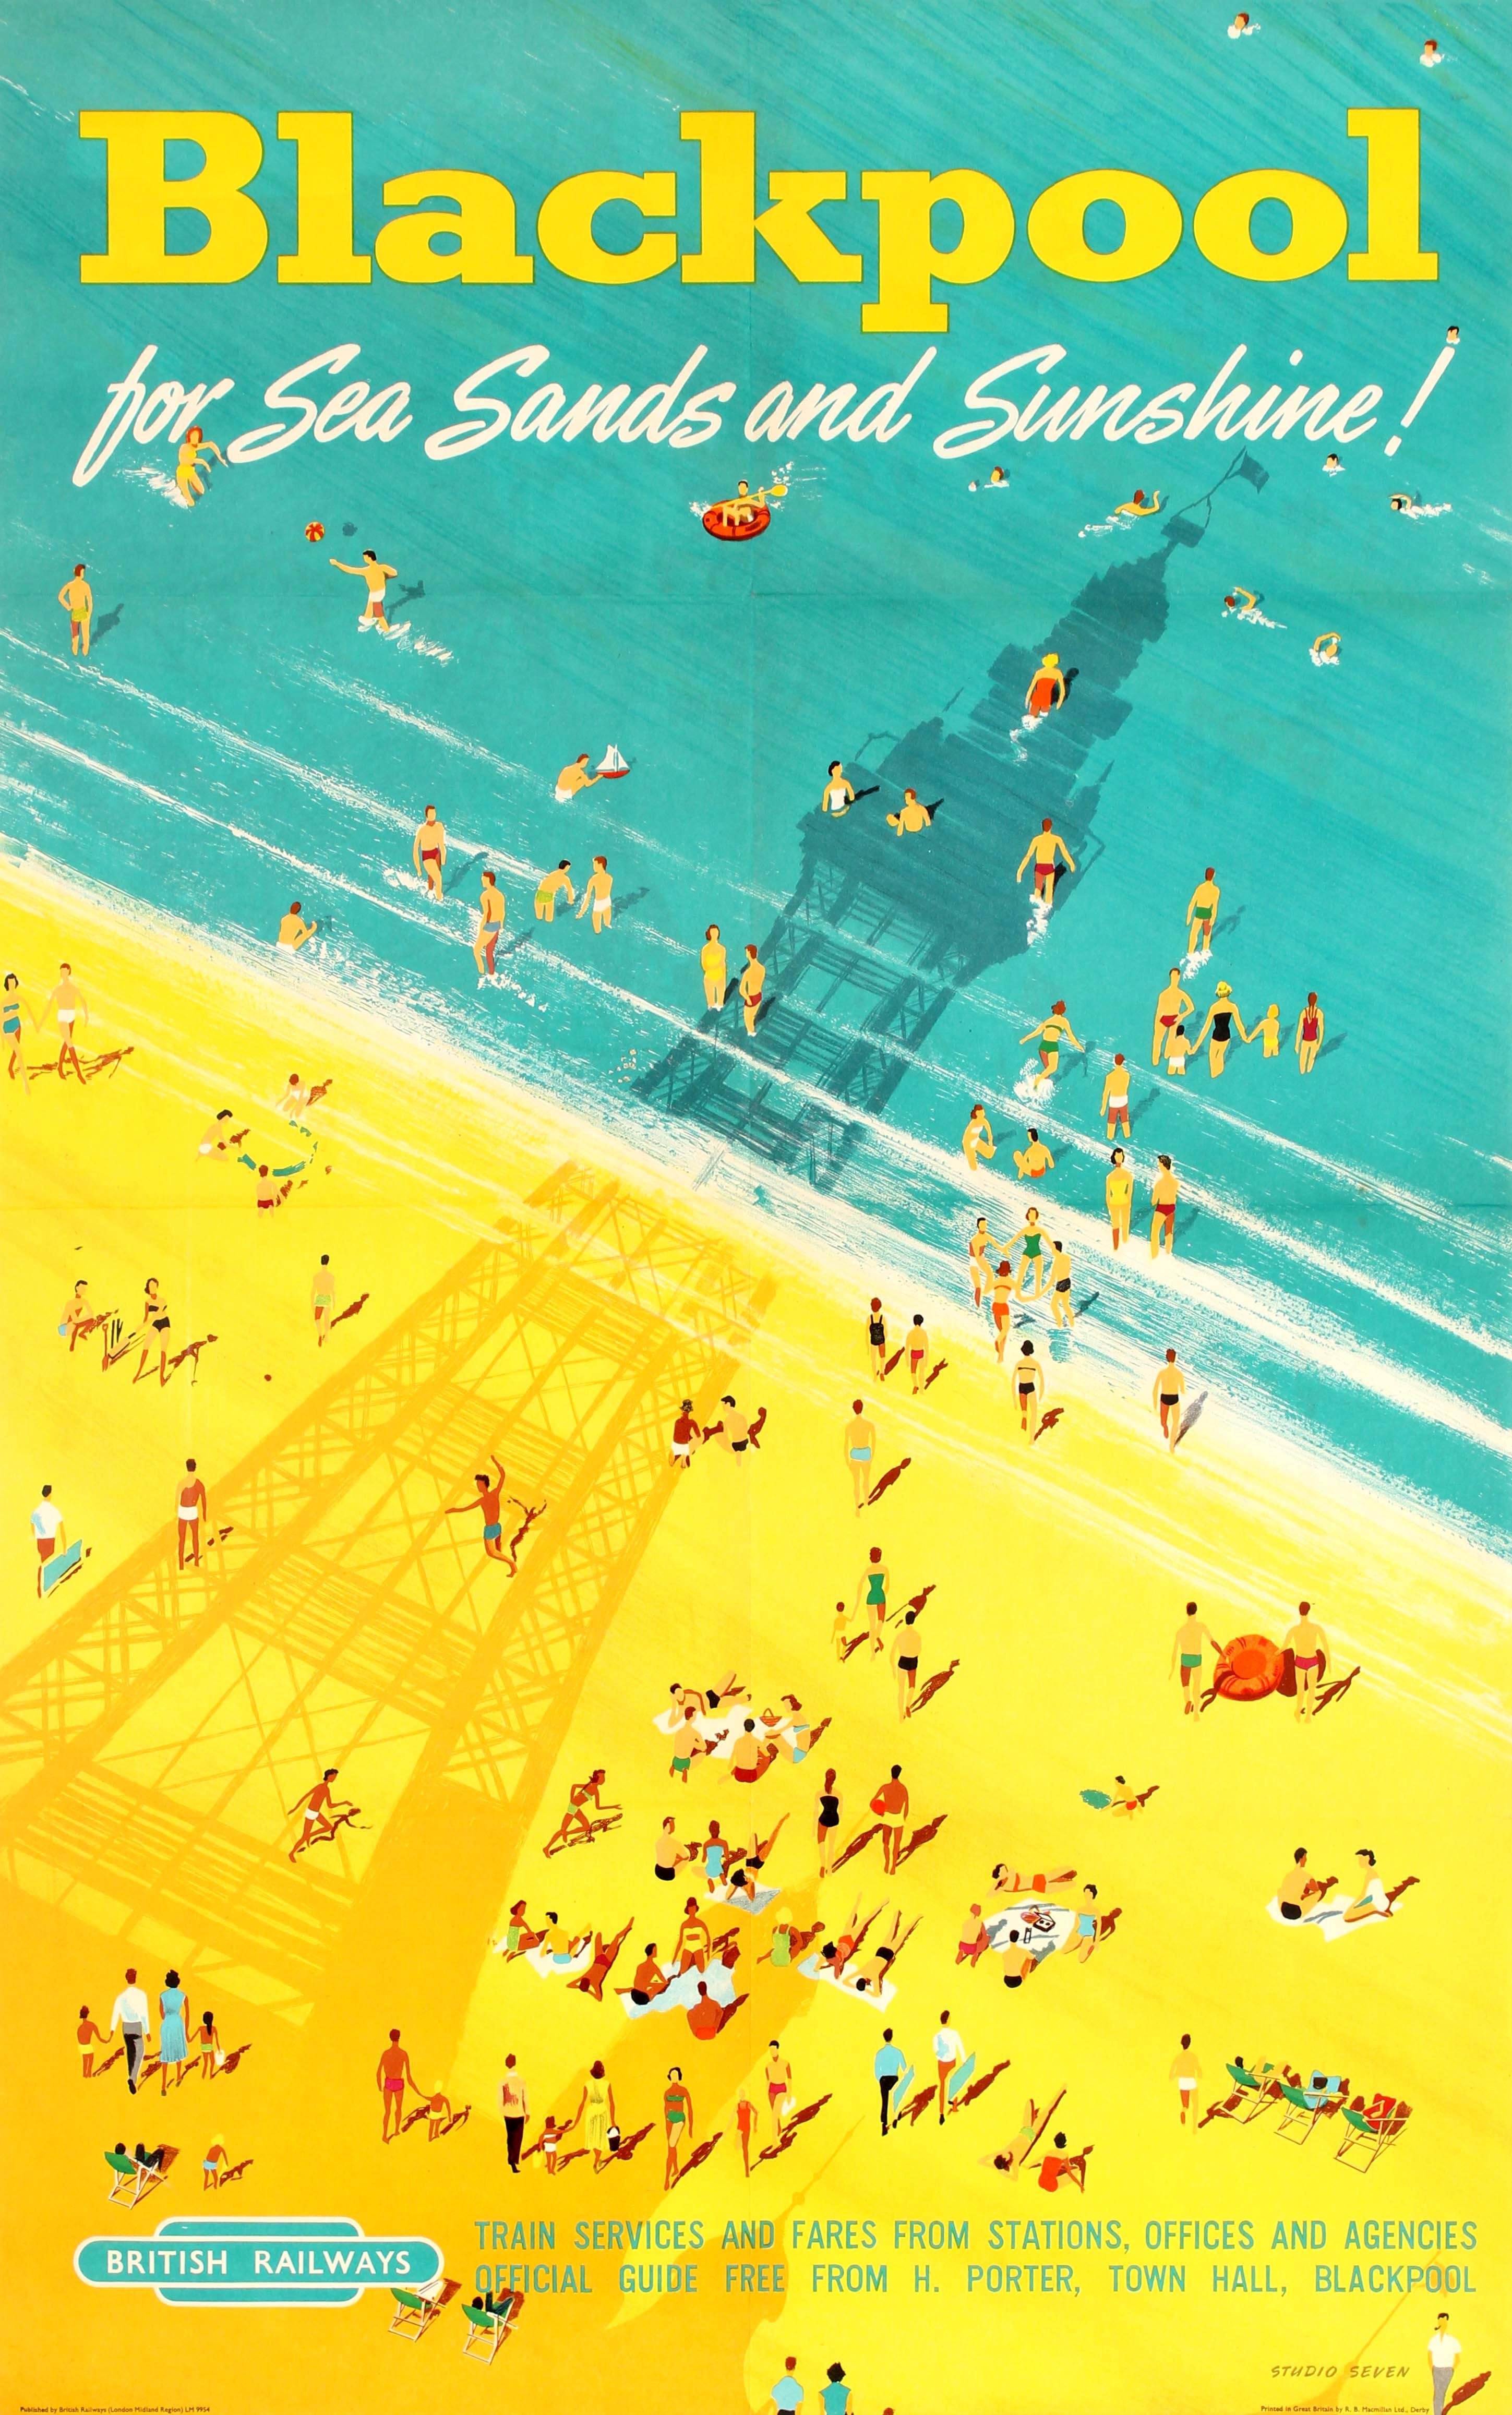 Studio Seven Print - Original Vintage British Railways Poster - Blackpool for Sea Sands and Sunshine!